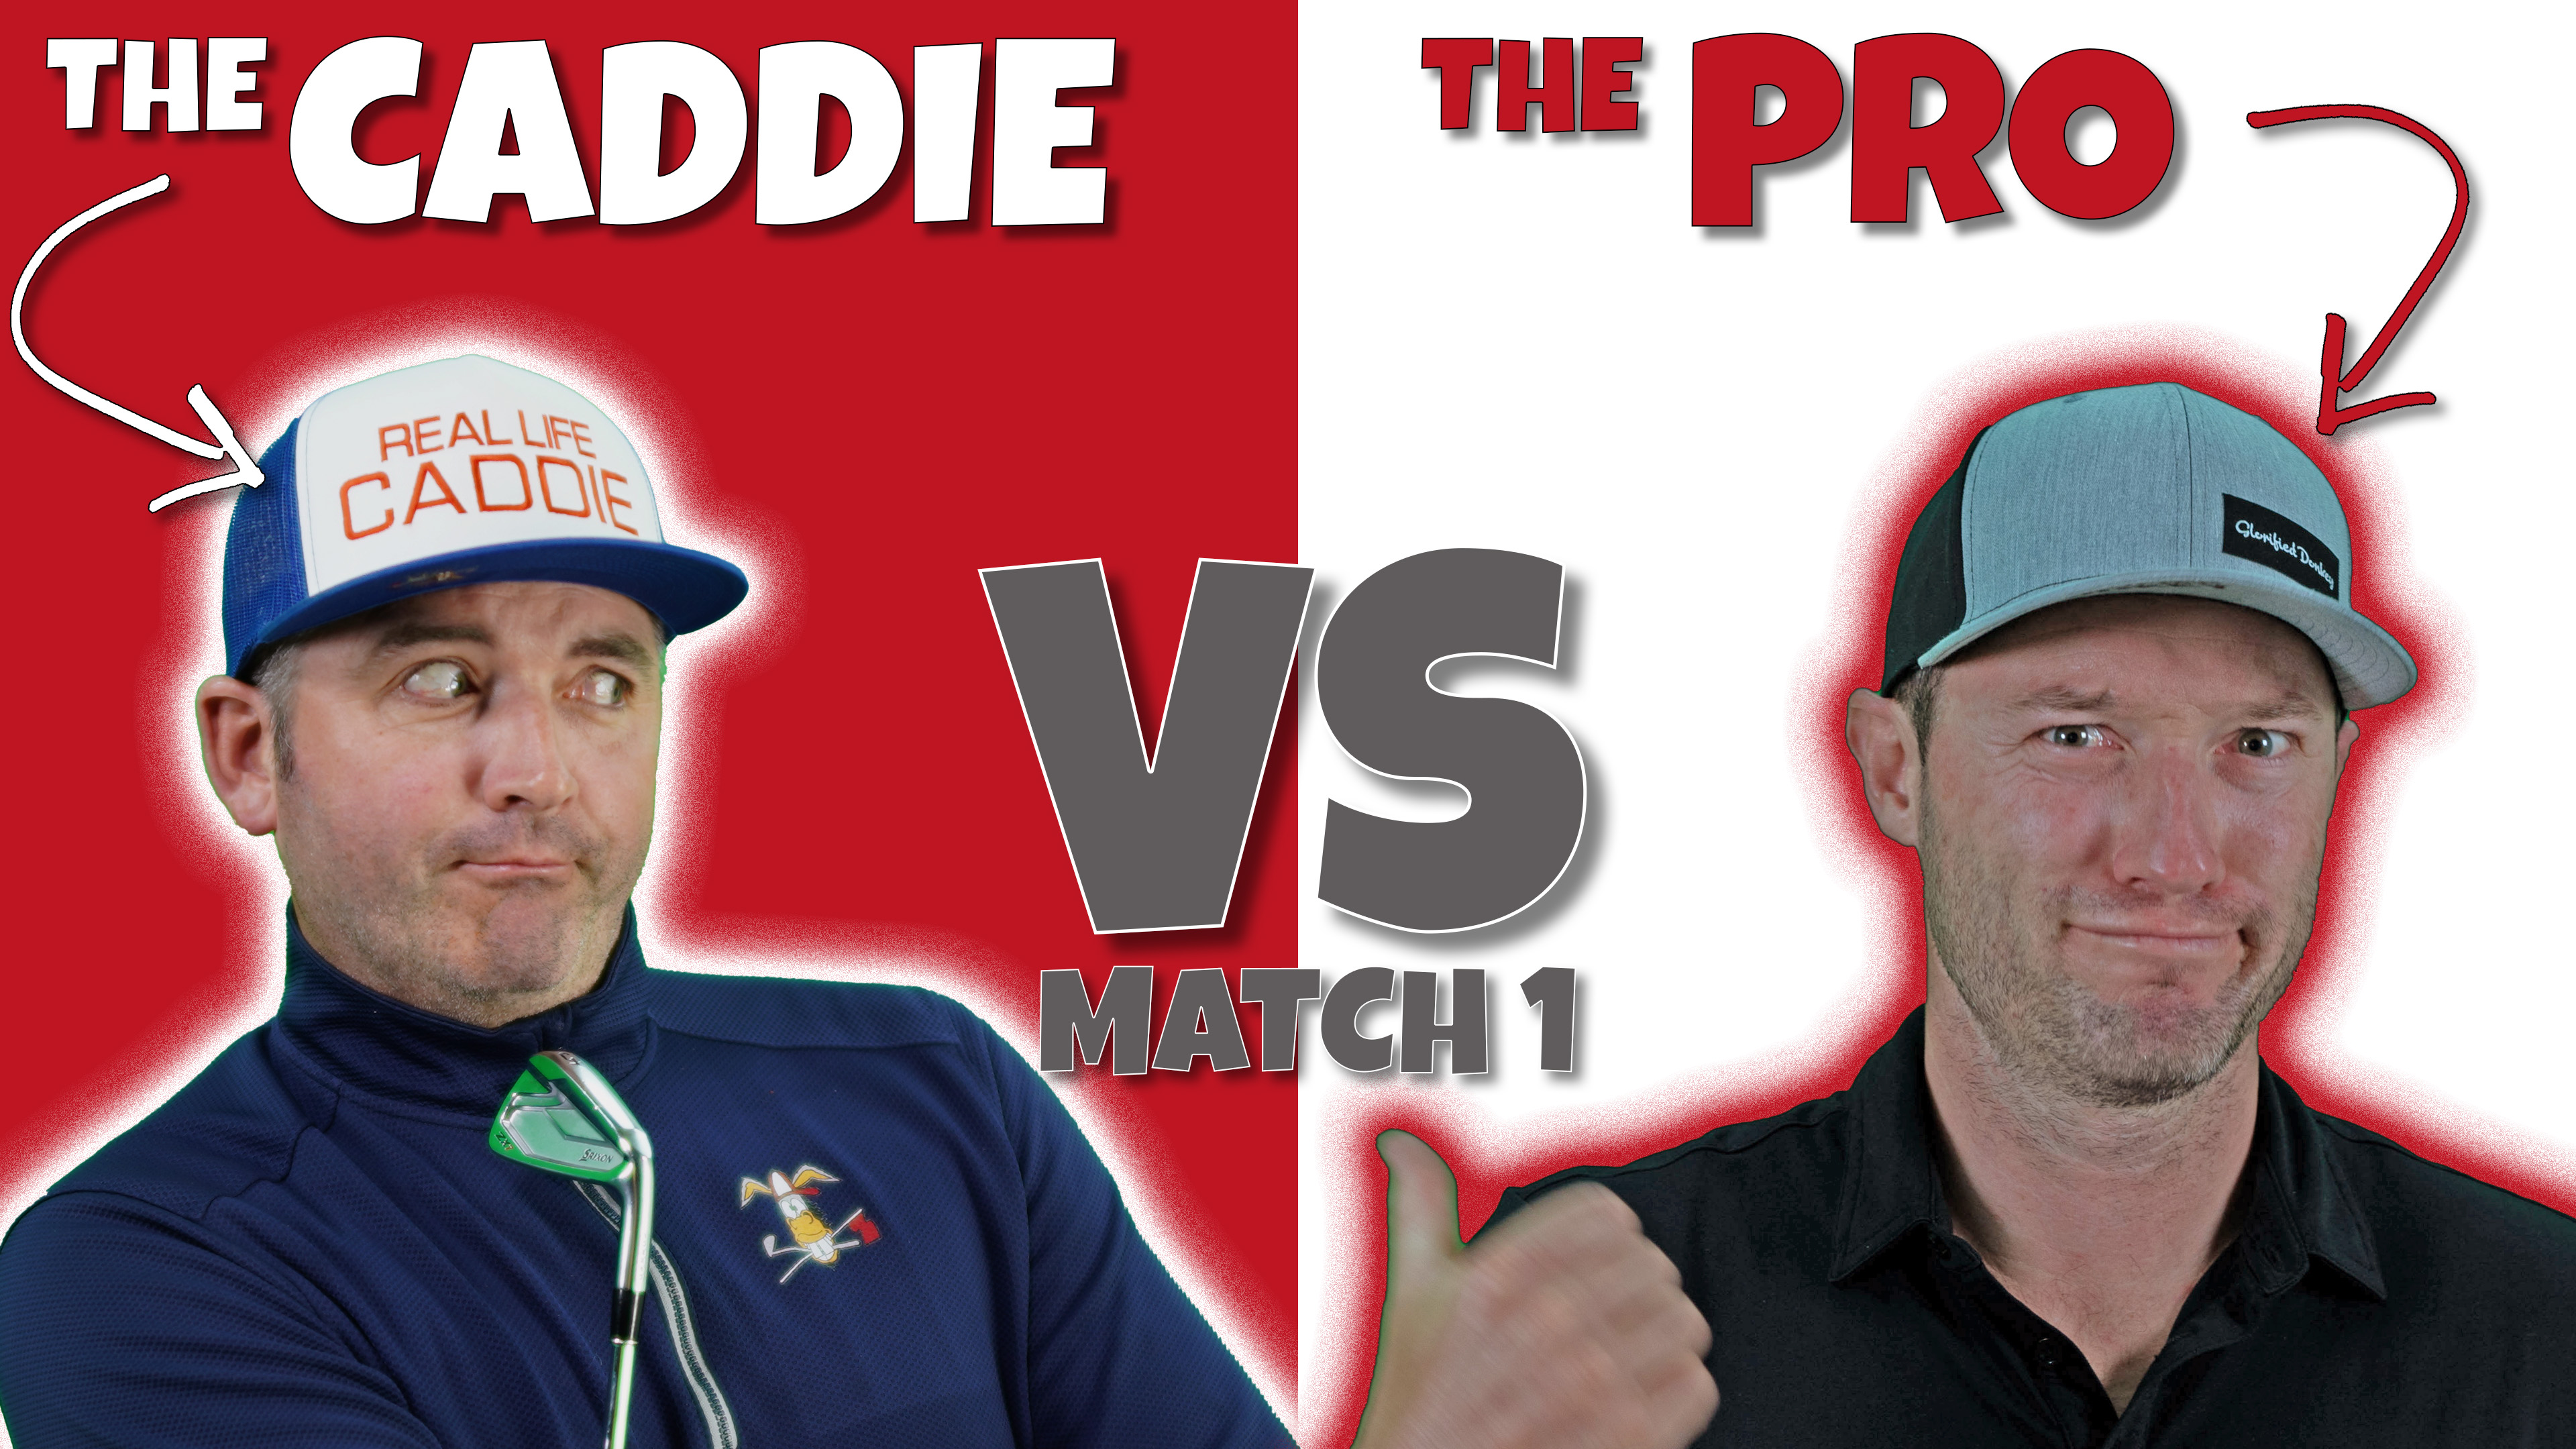 EPIC FINALE in Golf Caddie vs Pro Match 1! Image